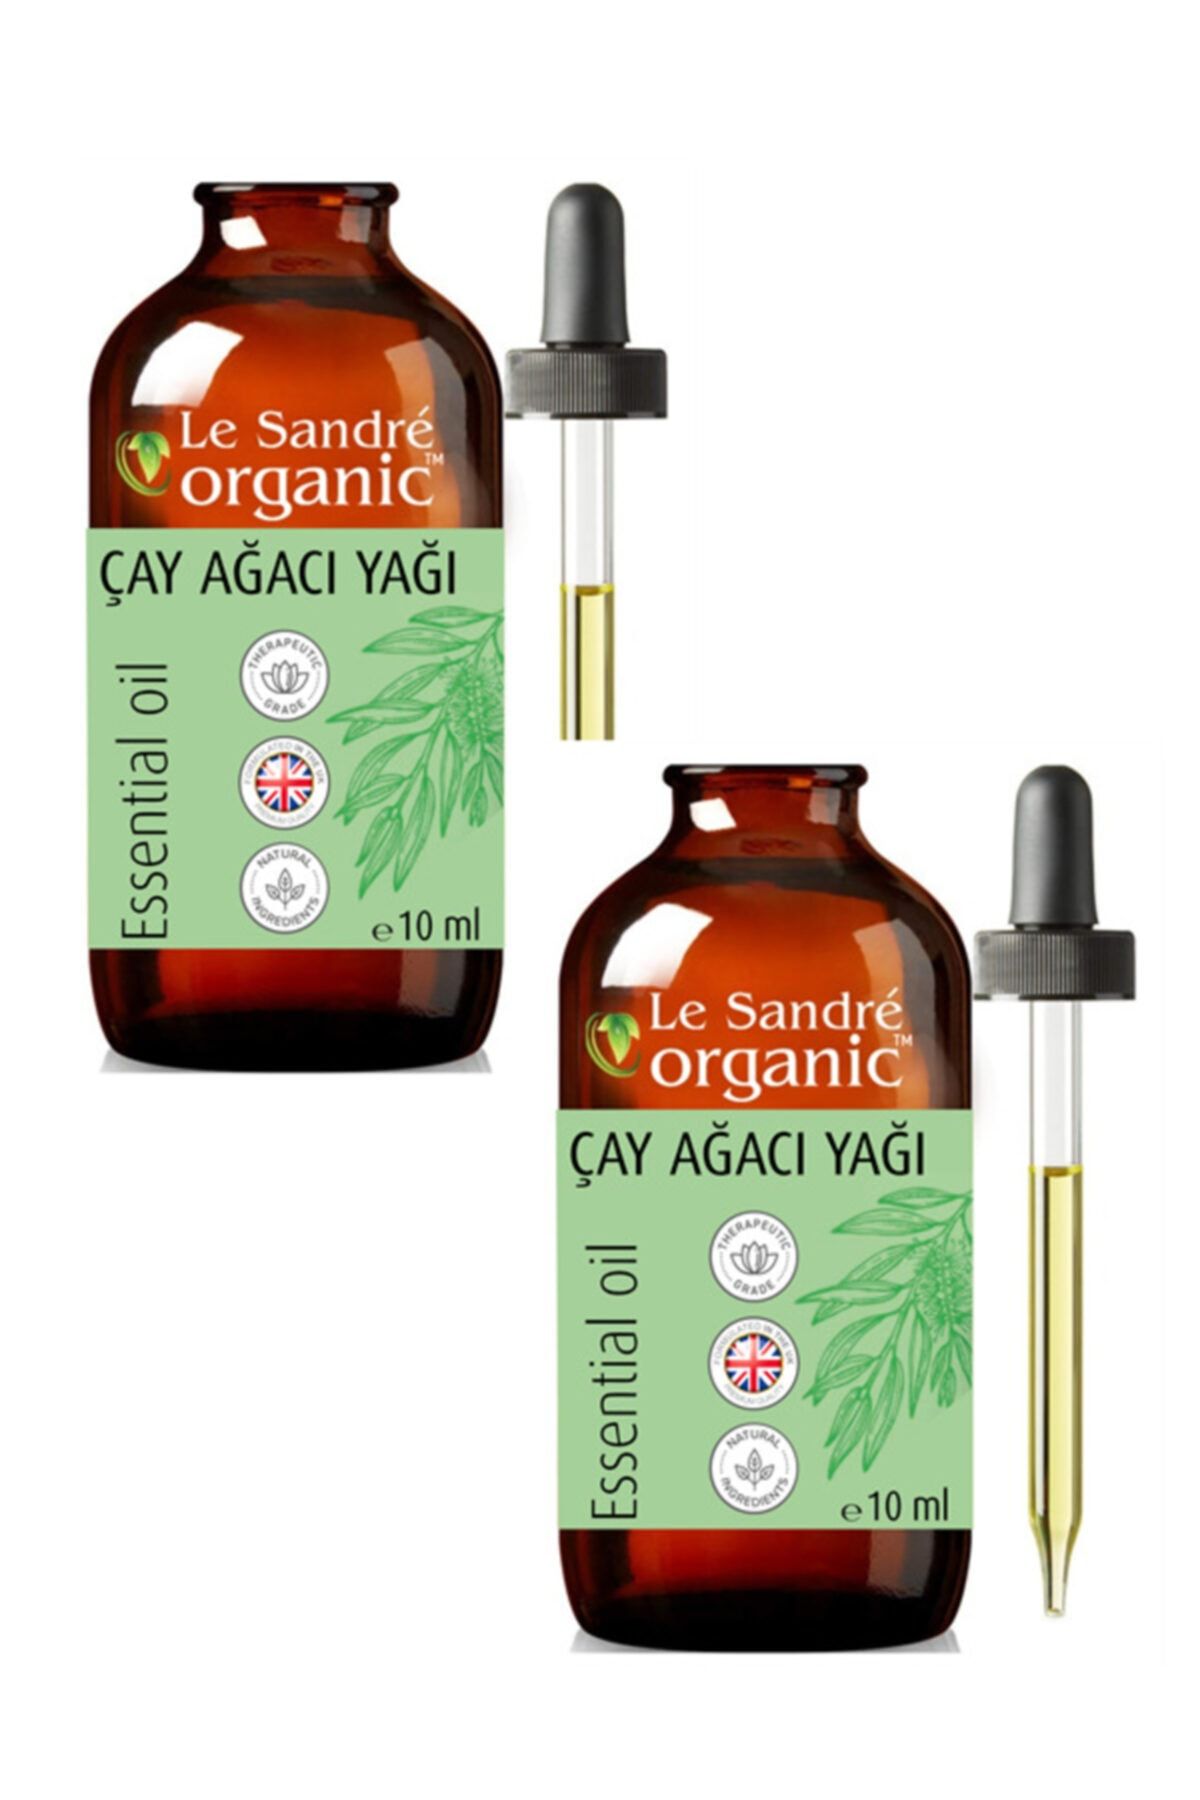 Le'Sandre Organics Çay Ağacı Yağı 2 x 10 ml